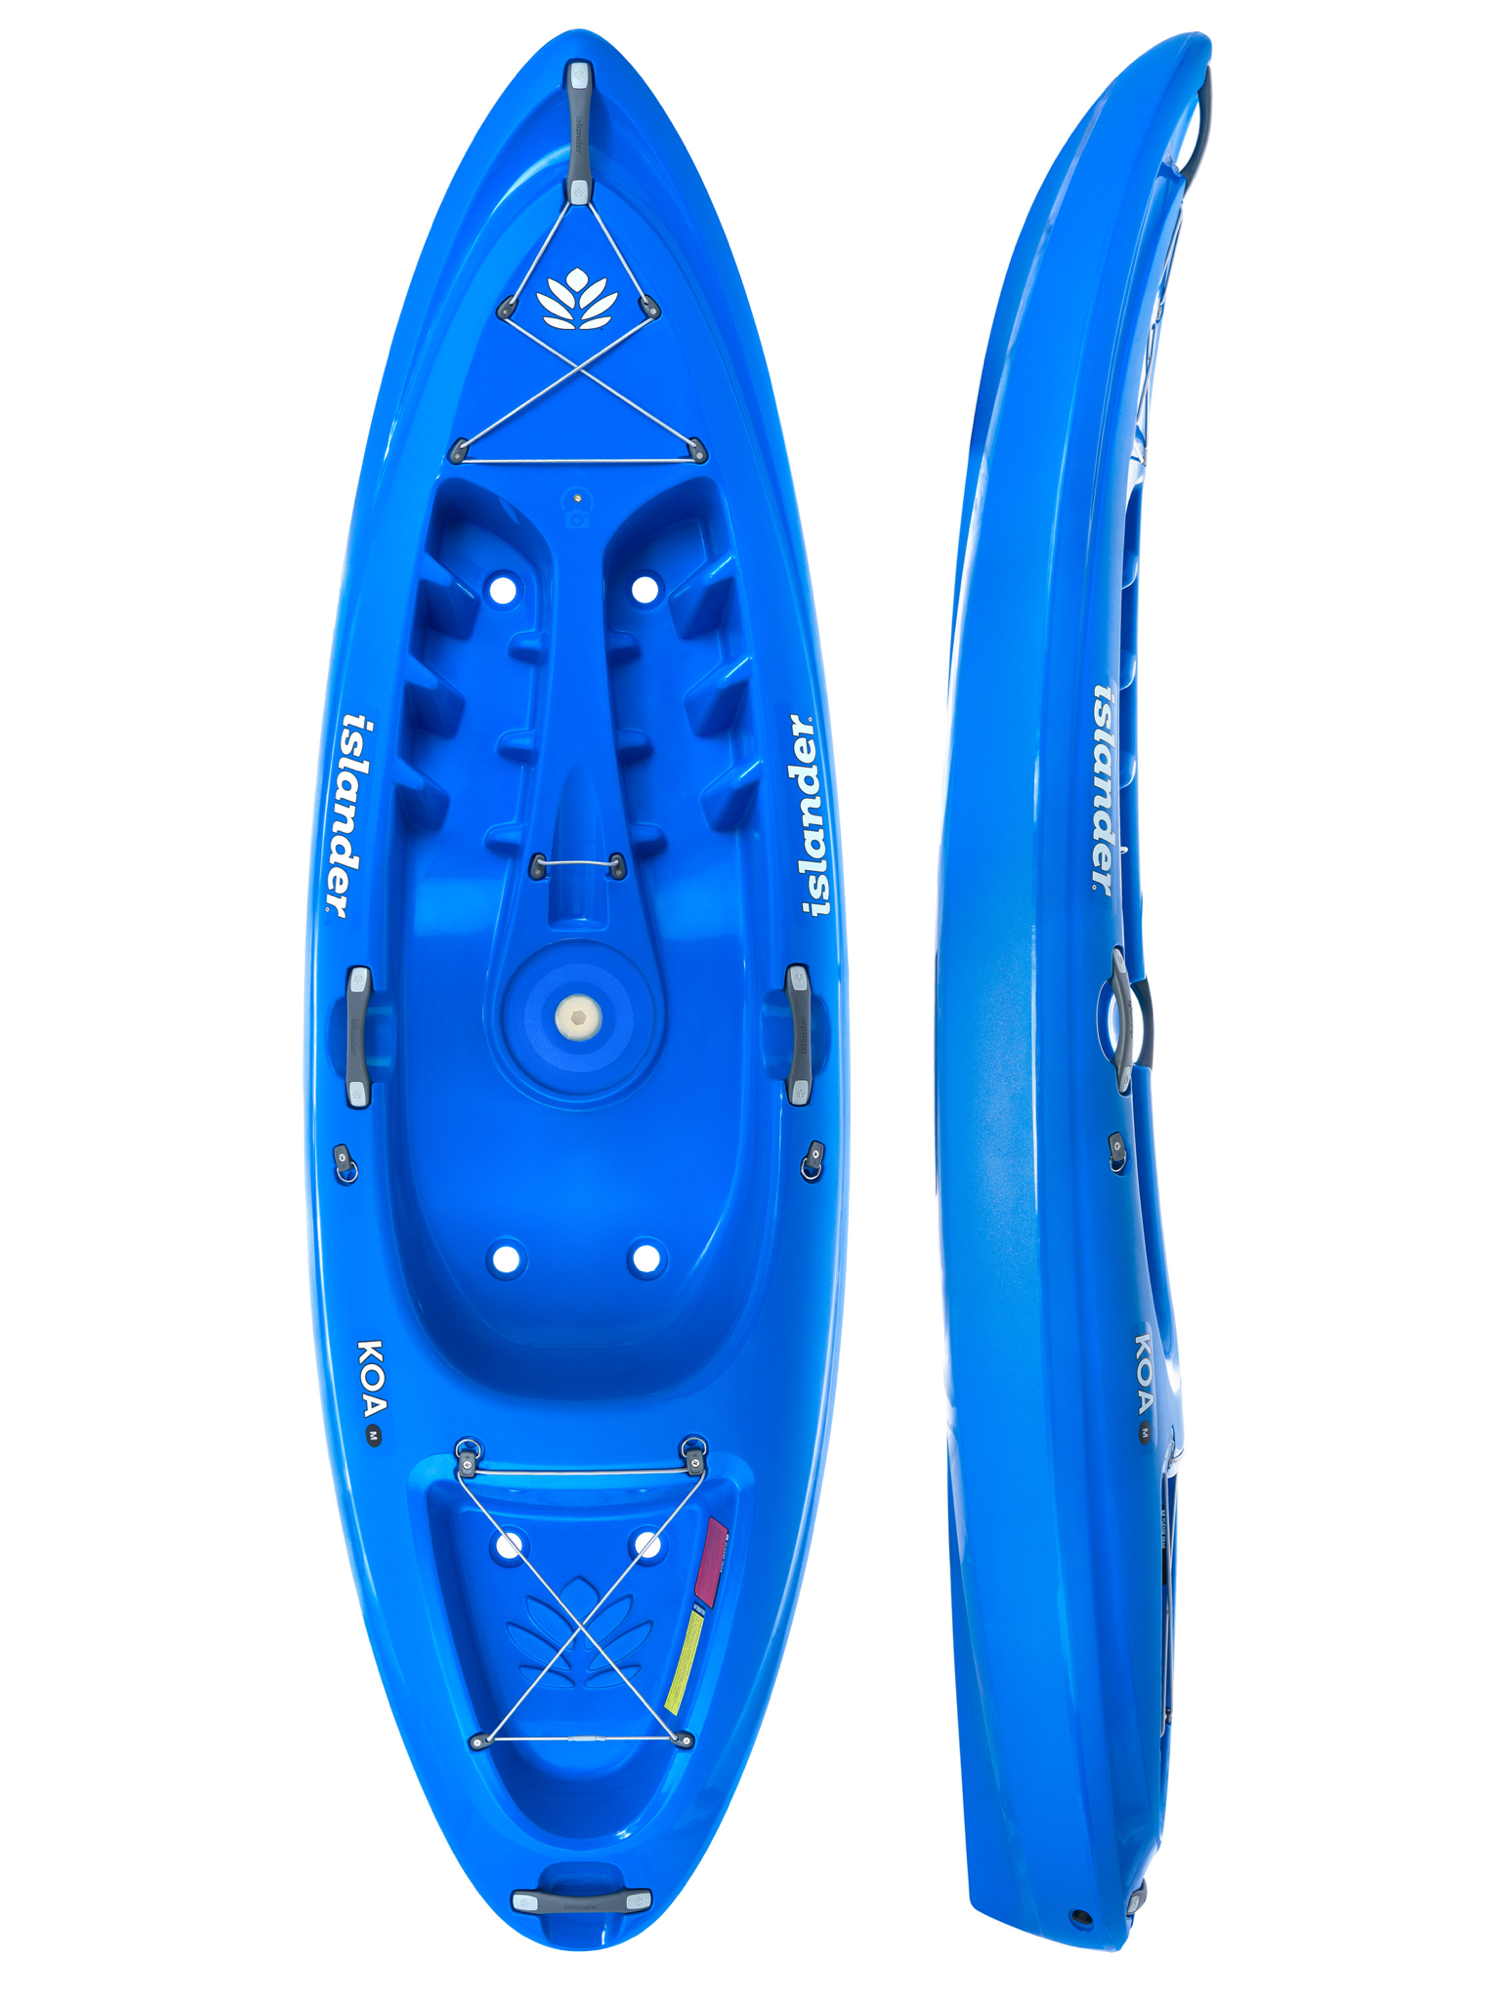 Islander Koa Single Kayak SALE. Includes FREE AQUA MARINA KP1 PADDLE.